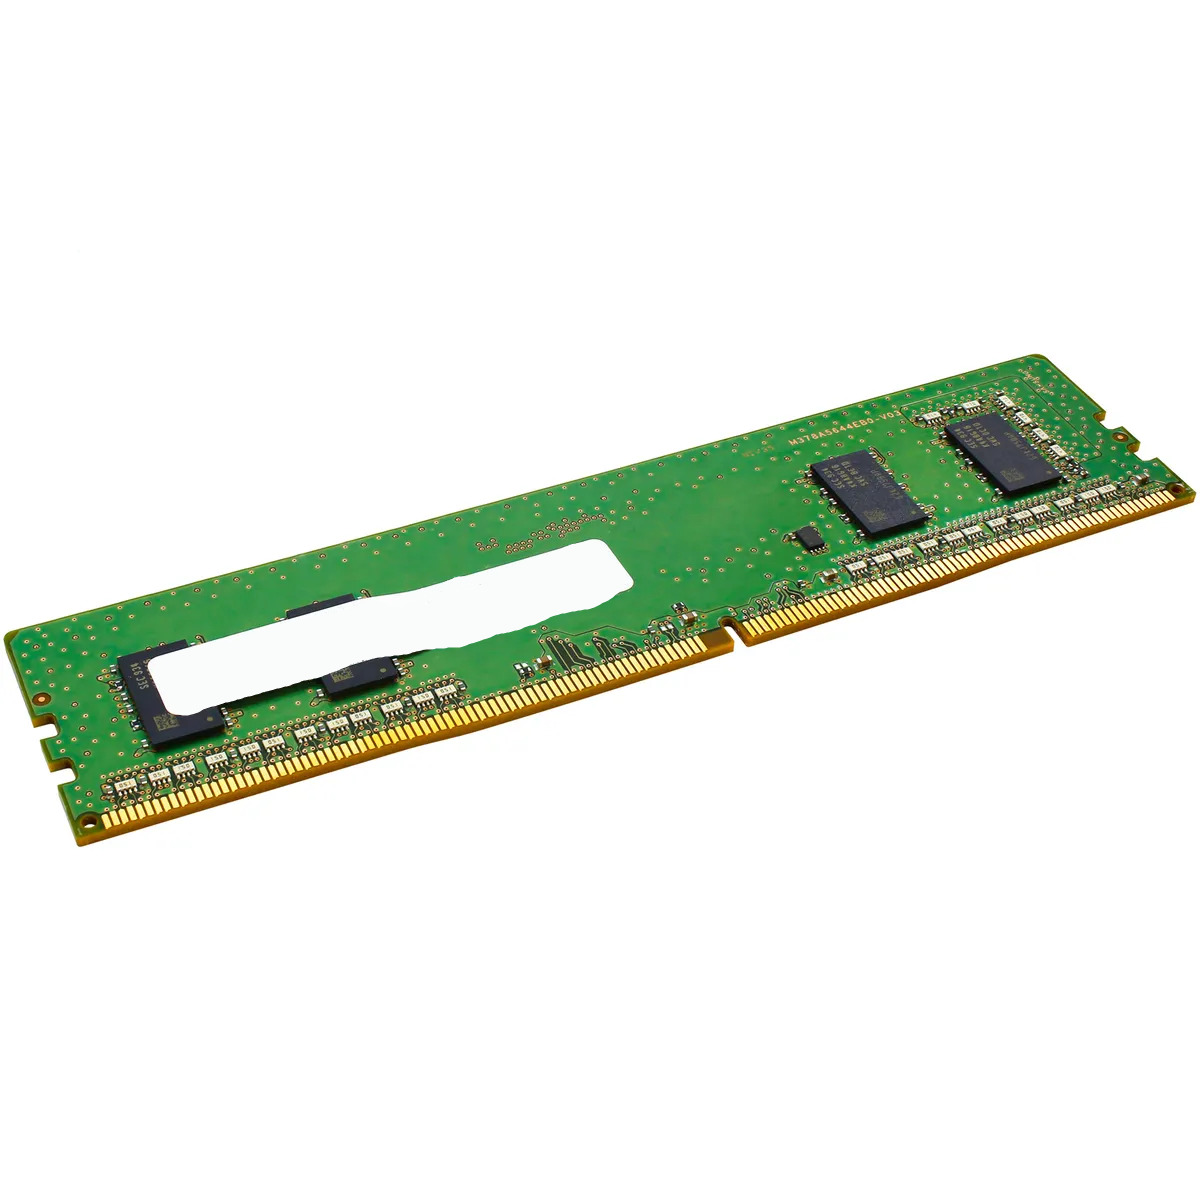 Lot of 74 4GB DDR4 DESKTOP RAM (MIXED BRANDS AND SPEEDS)